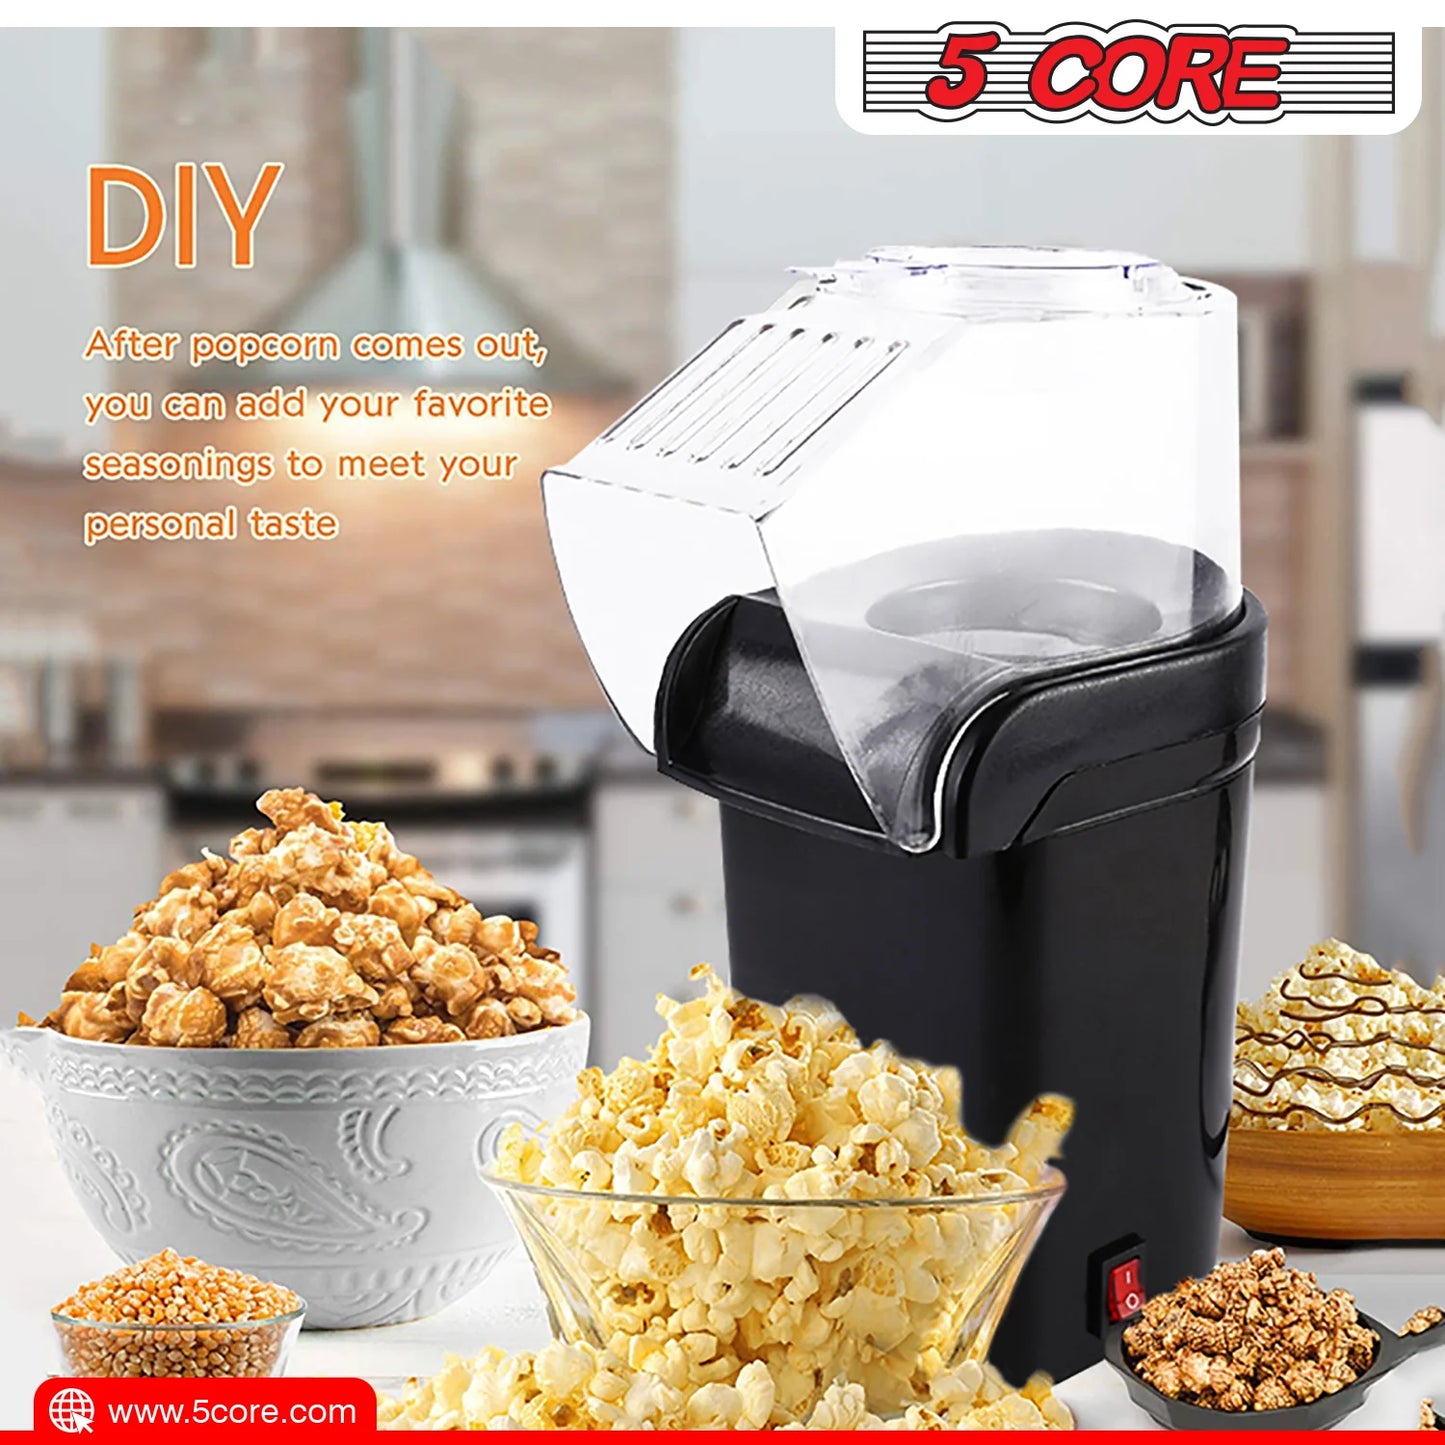 "5 Core Black Hot Air Popcorn Machine - 16 Cup Capacity, Compact Mini Popcorn Popper Maker - POP B"